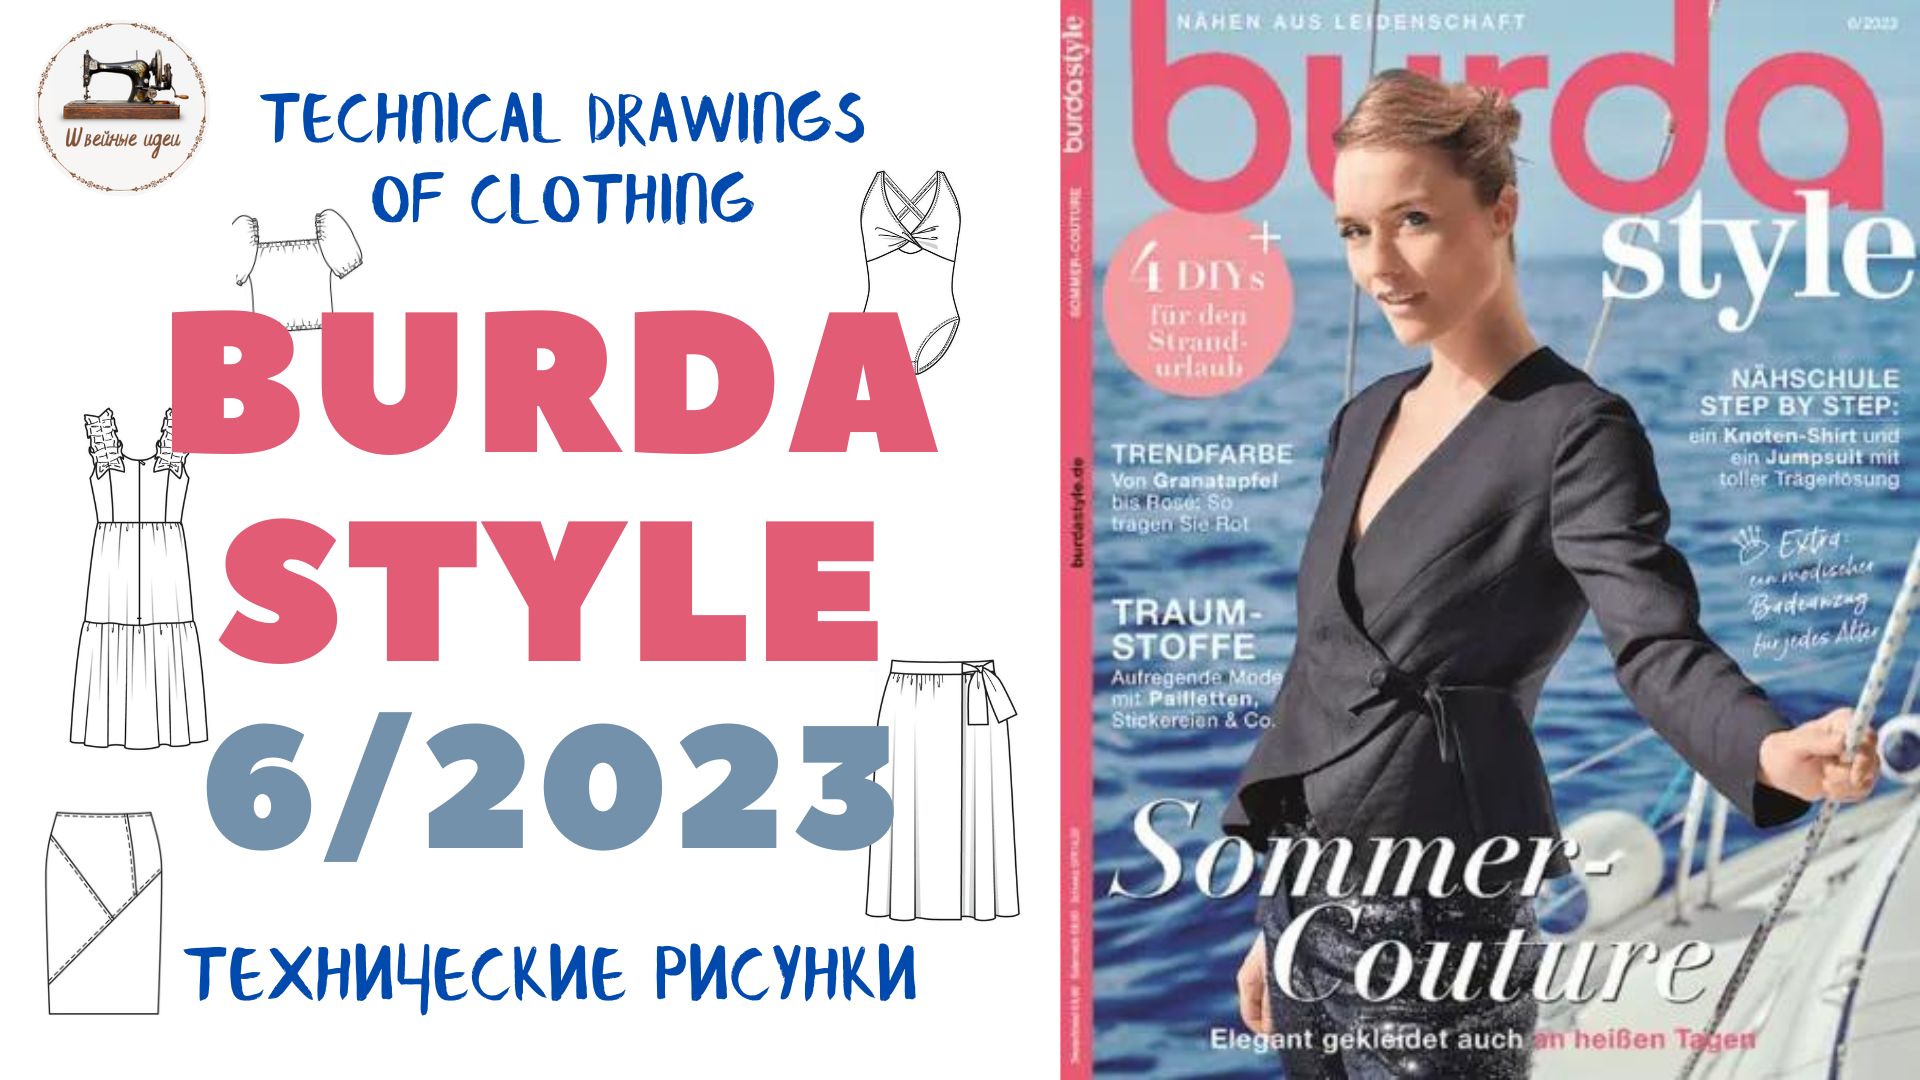 Burda STYLE 6/2023 Технические рисунки. Full preview and complete line drawings